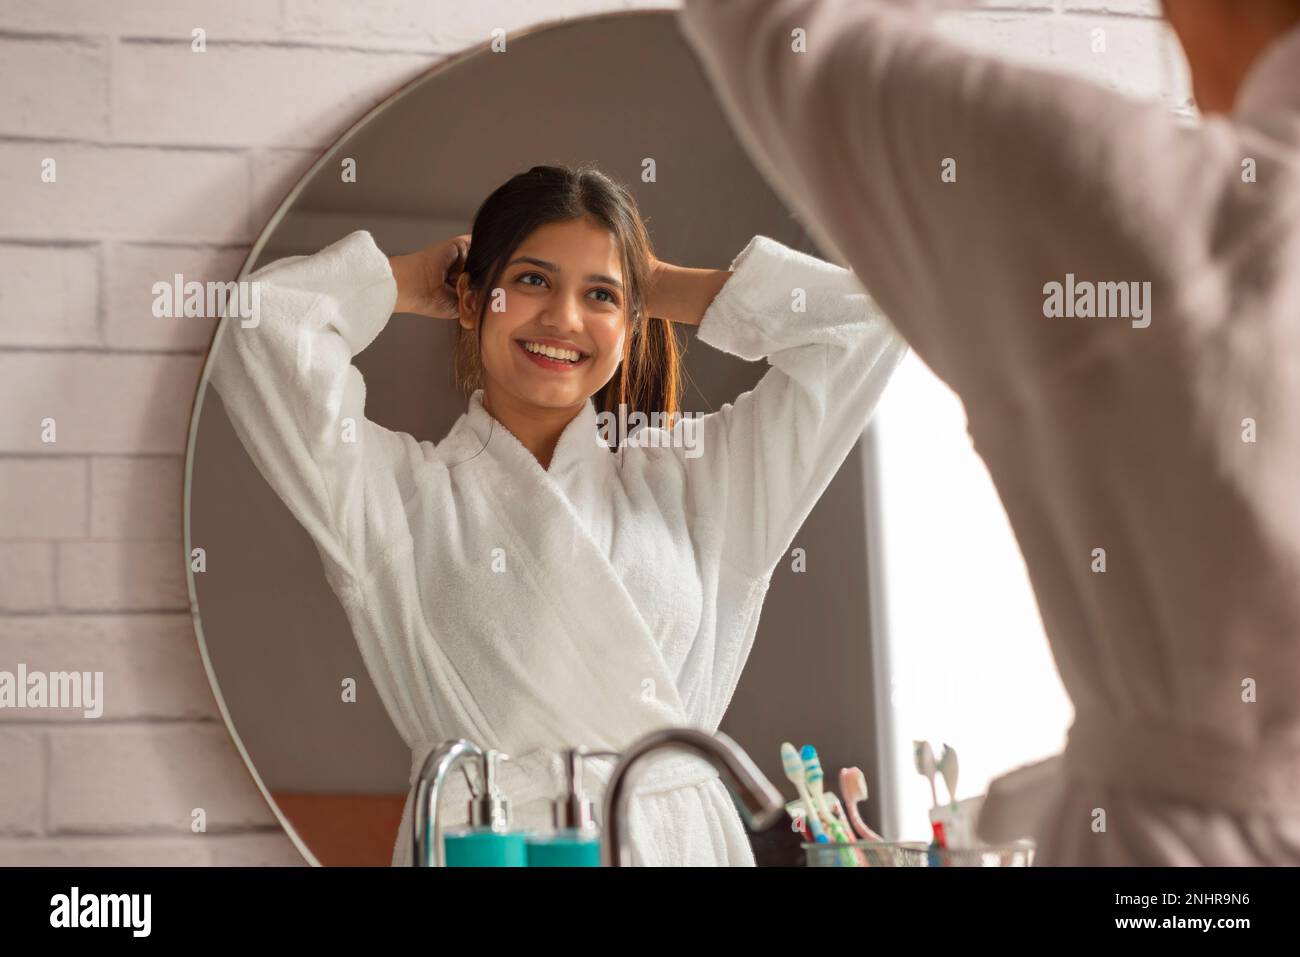 Cheerful woman in bathrobes fixing her hair in bathroom mirror Stock Photo